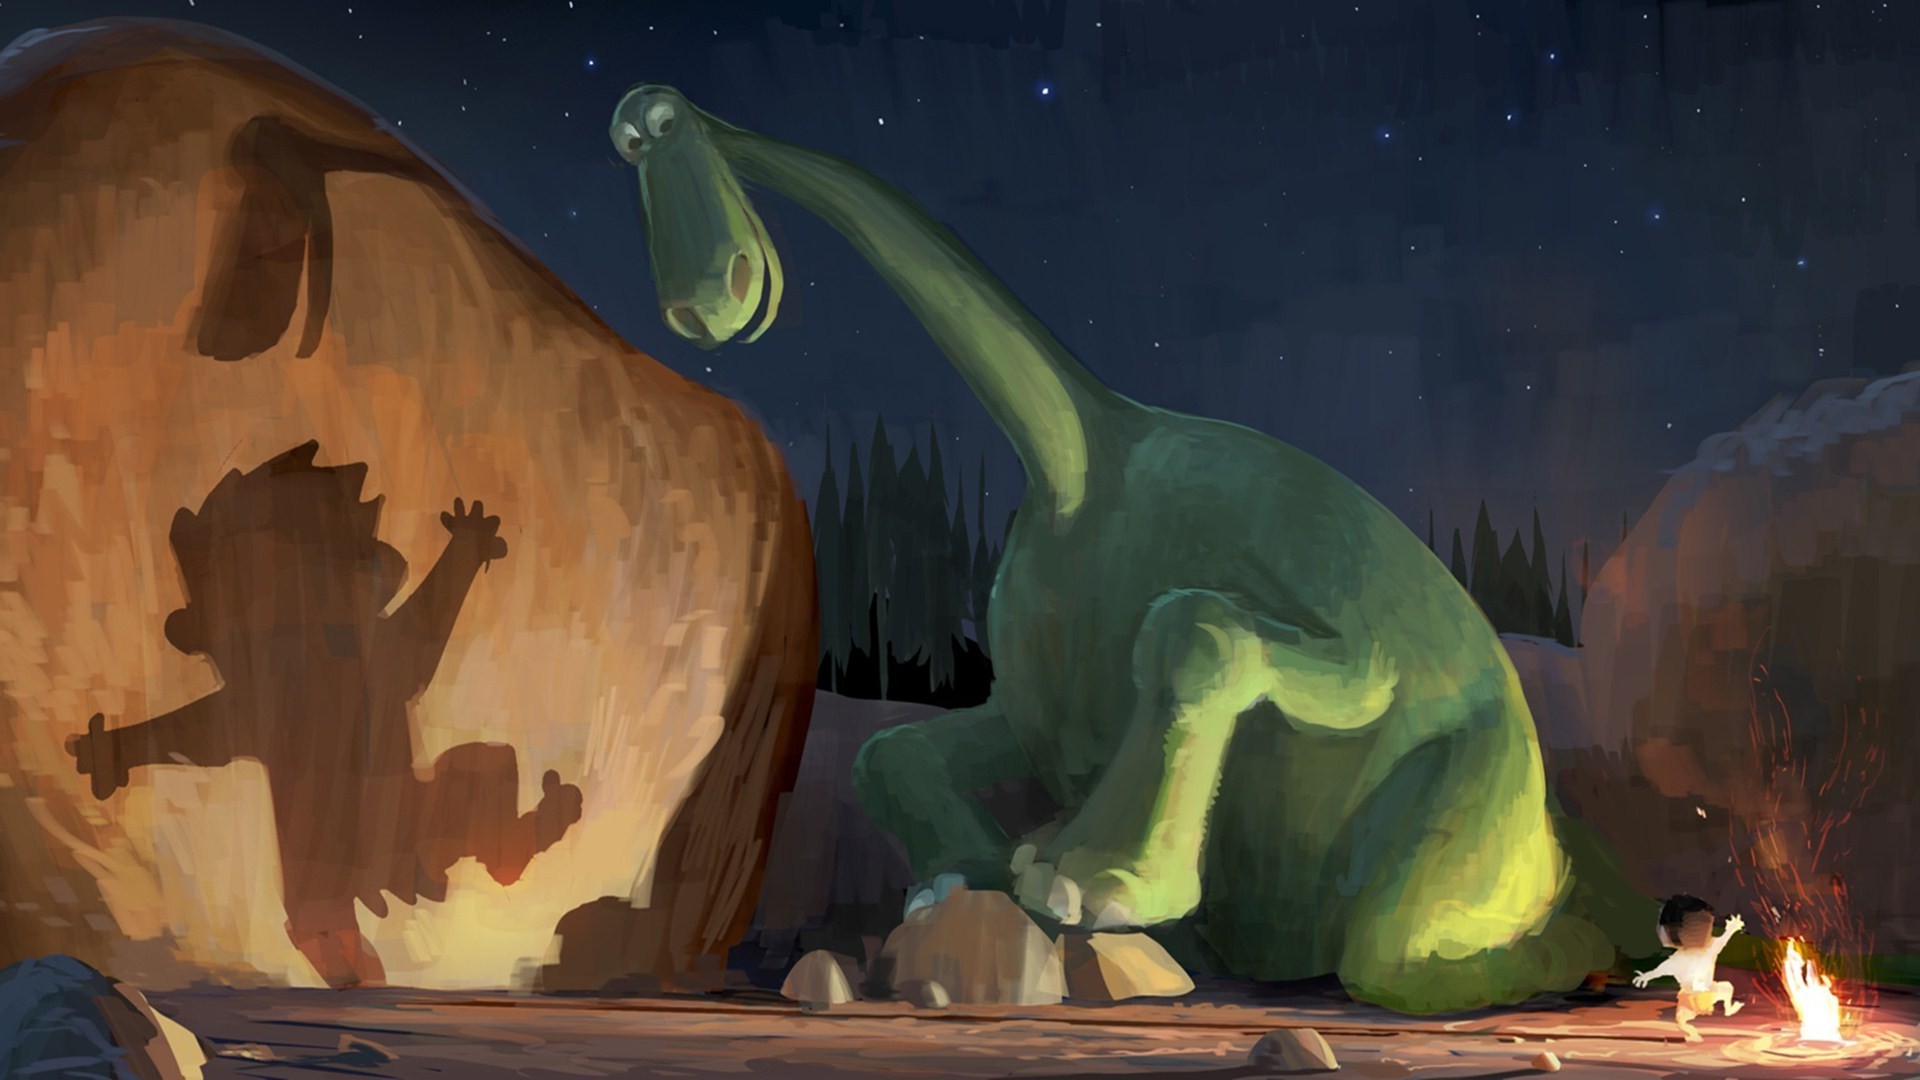 digital Art, Animals, Nature, Pixar Animation Studios, Dinosaurs, The Good Dinosaur, Stones, Night, Fire, Shadow, Stars, Dancing Wallpaper